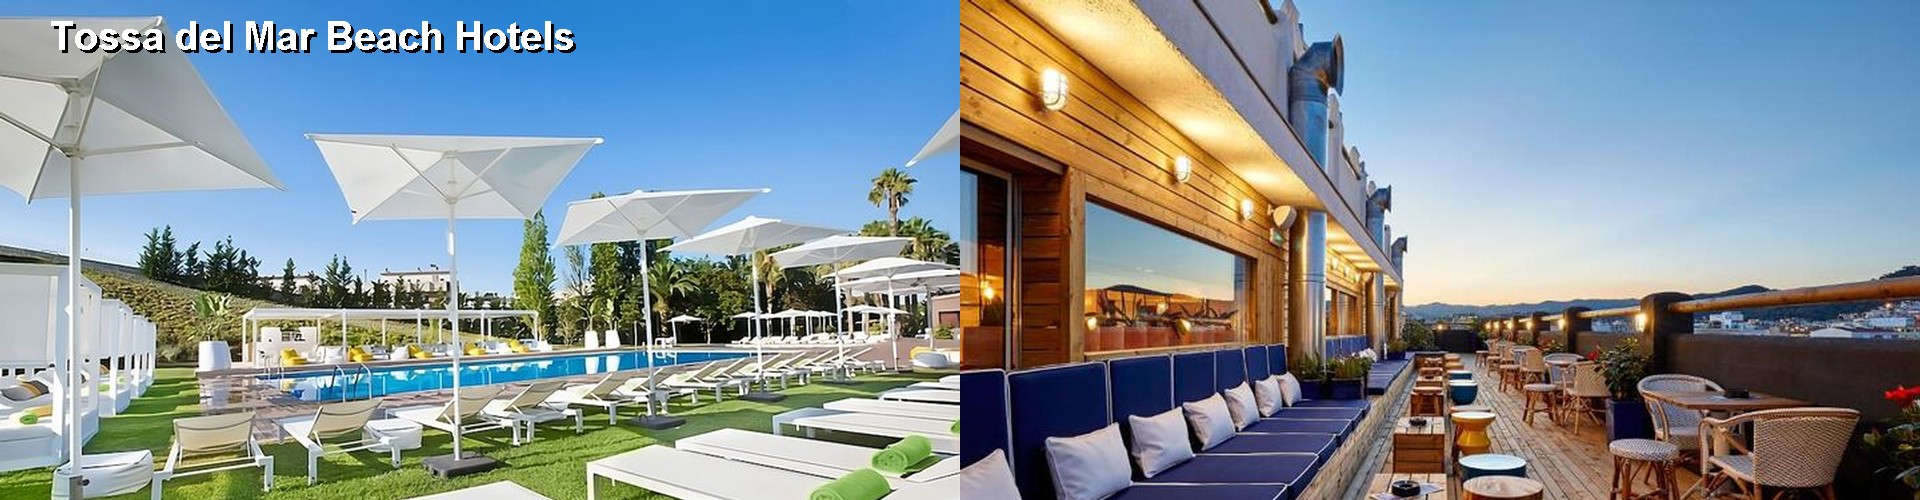 5 Best Hotels near Tossa del Mar Beach